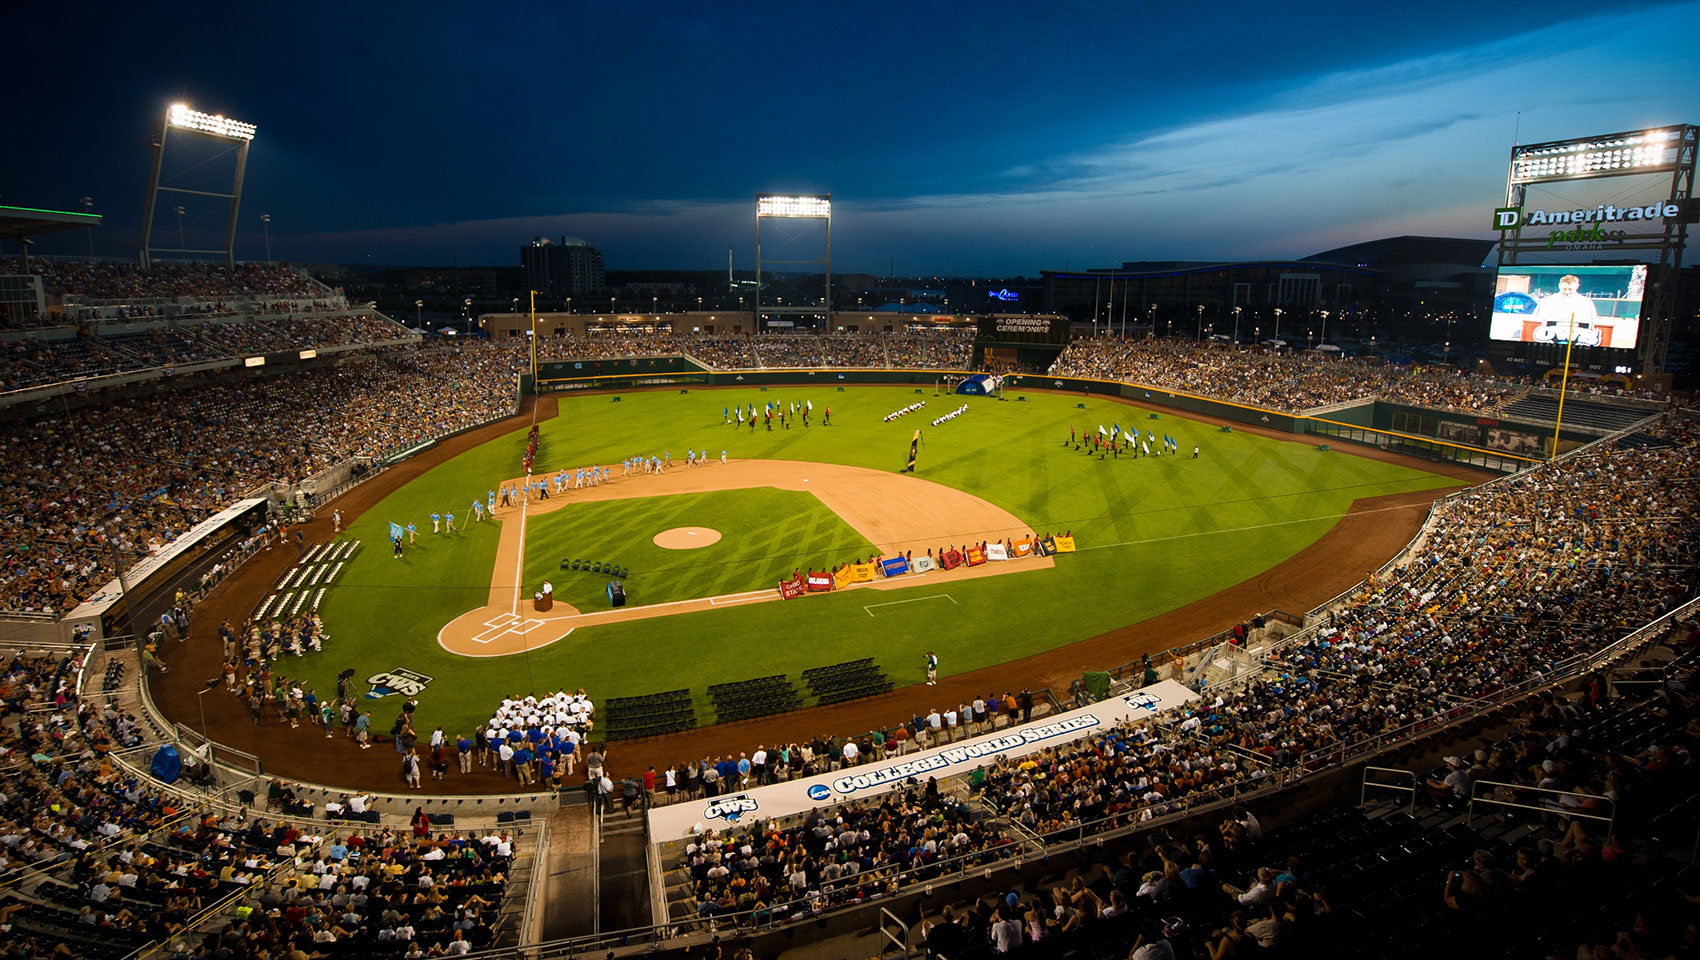 baseball stadium at dusk with teams on the field